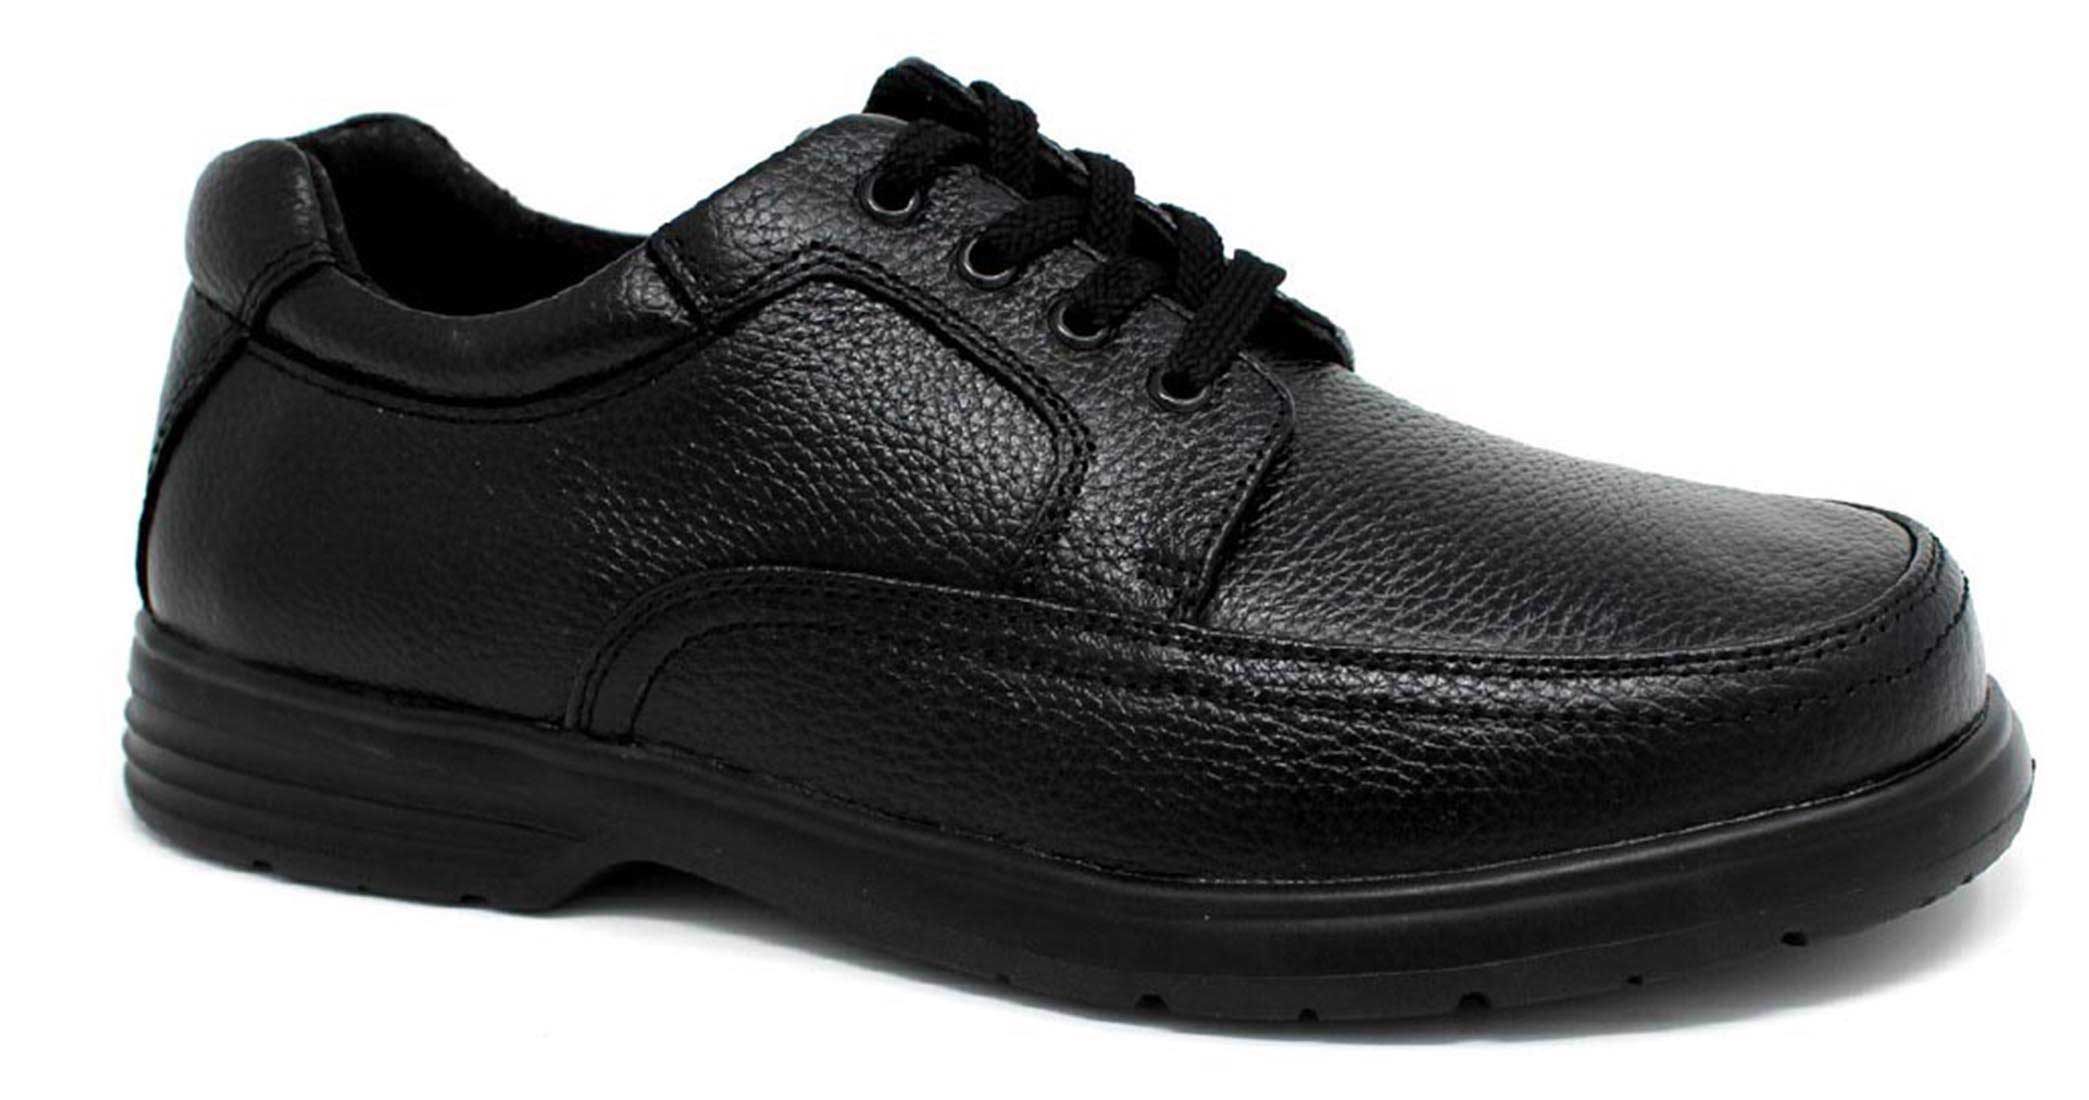 Apis Mt. Emey 9608 Men's Premier Lace Up Casual Shoe - Comfort Orthopedic Diabetic Shoe - Extra Depth - Extra Wide